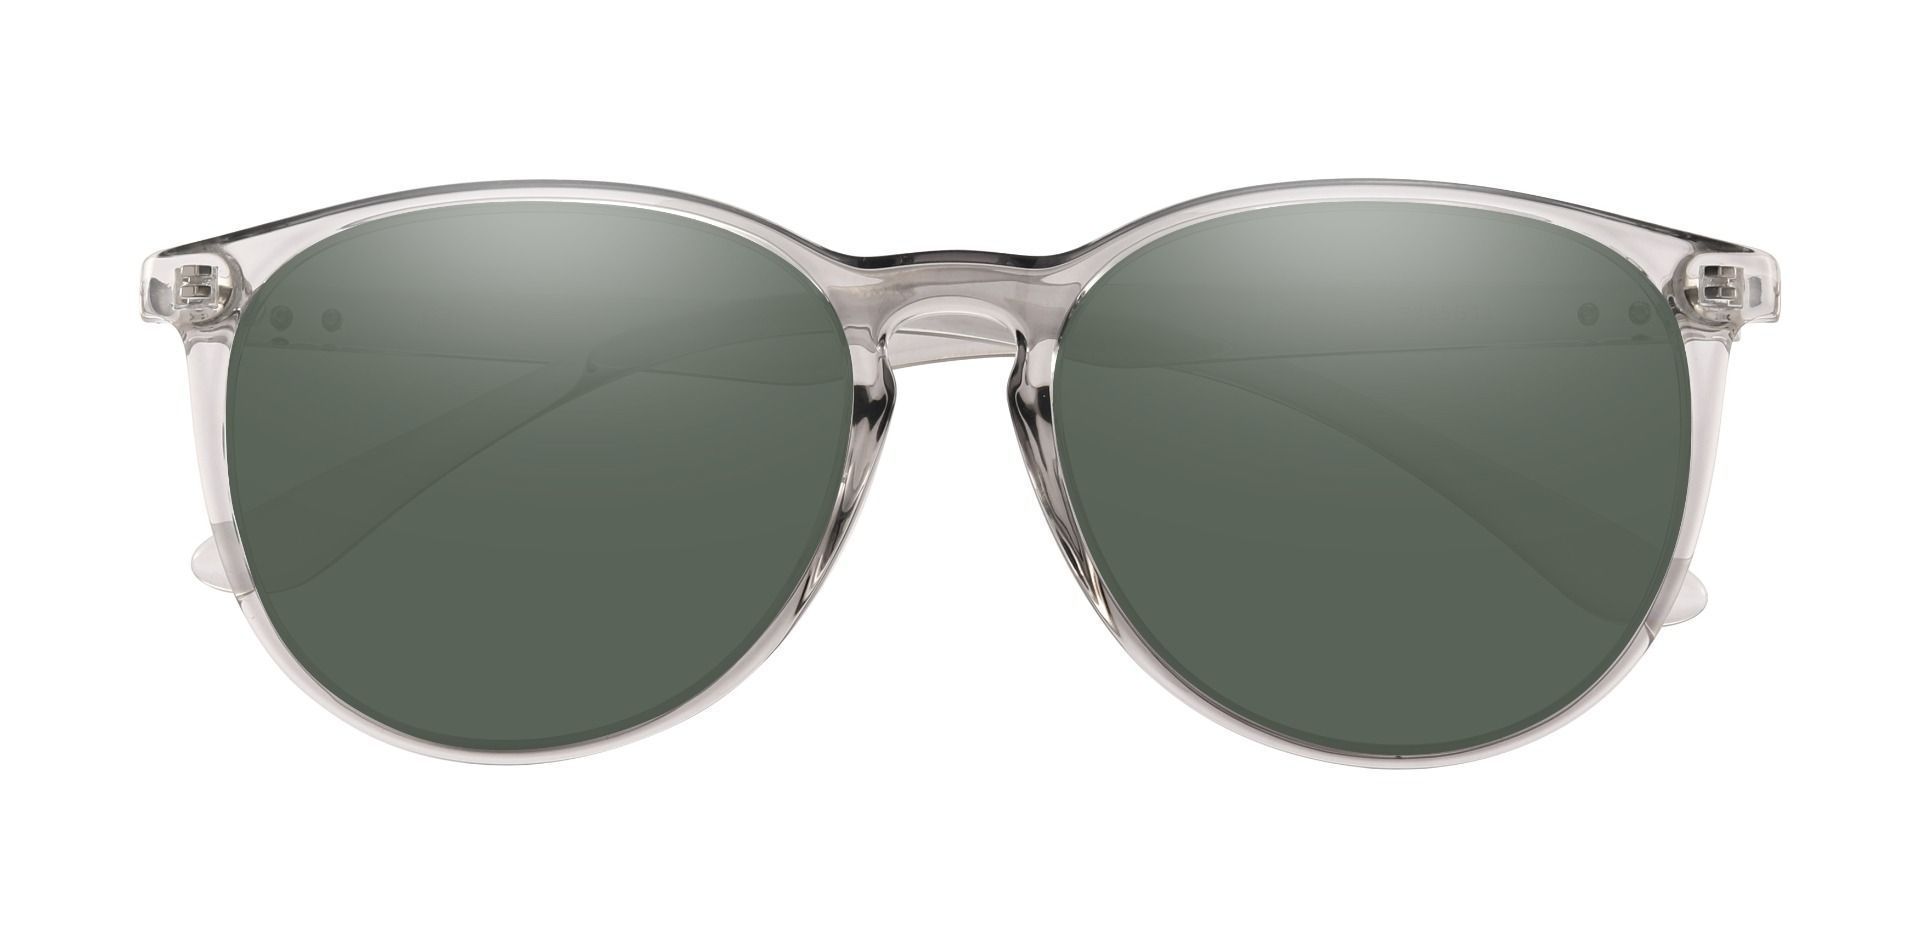 Maple Oversized Oval Prescription Sunglasses - Gray Frame With Green Lenses